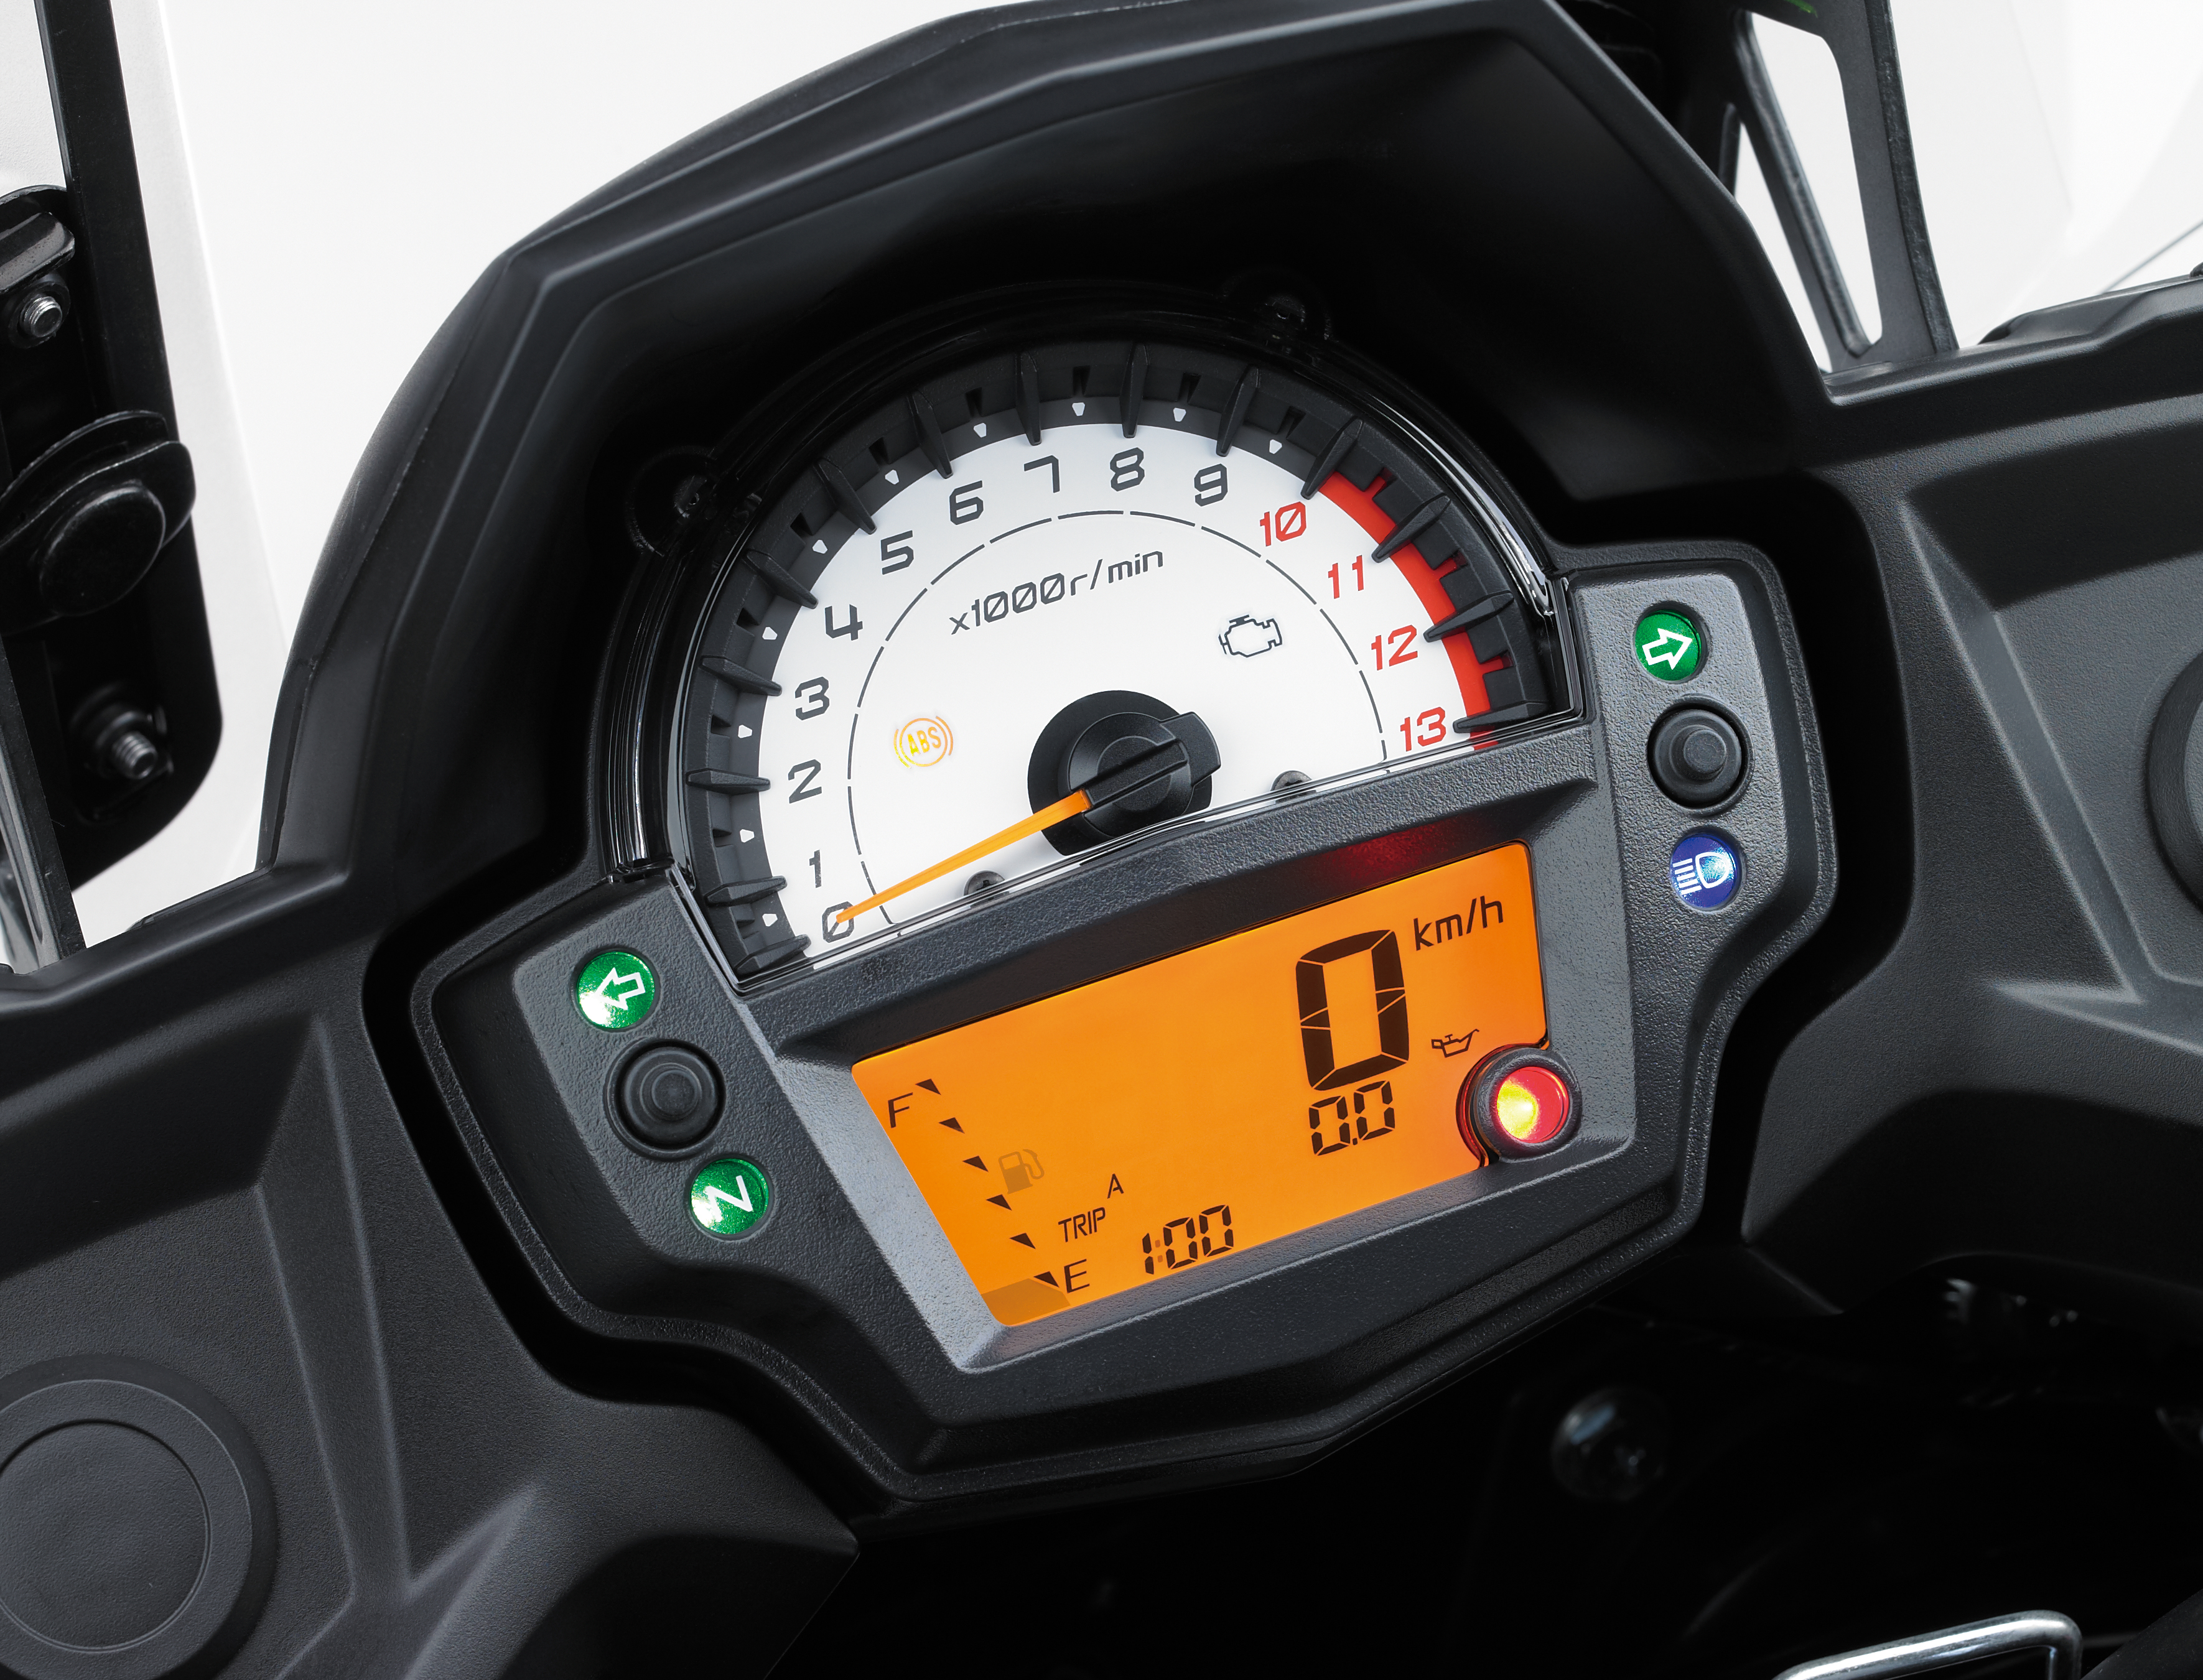 Intermot 2014: New Kawasaki Versys 650 unveiled